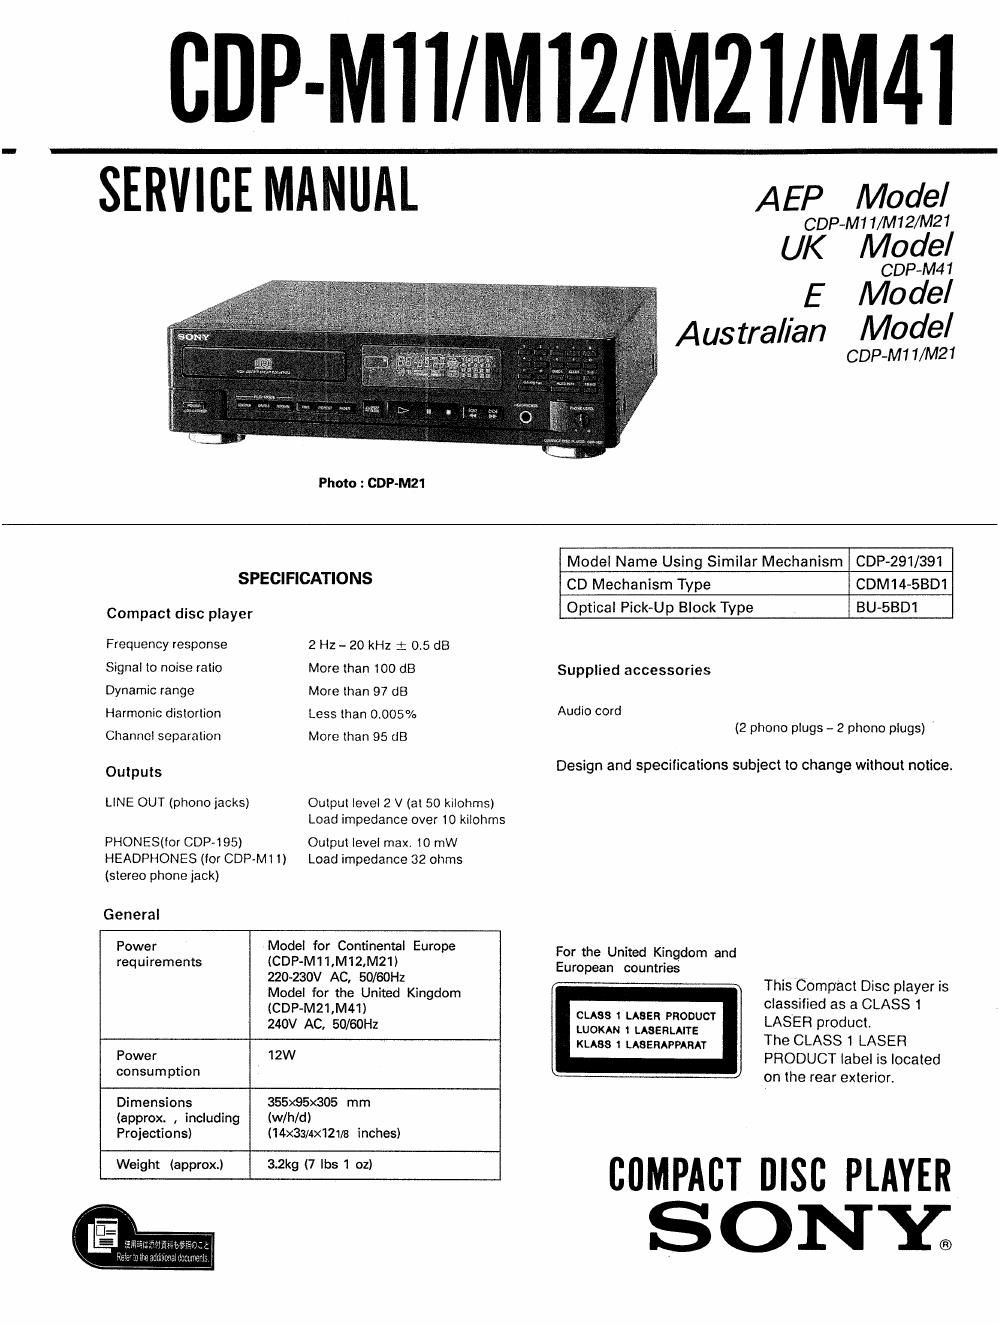 sony cdp m 41 service manual